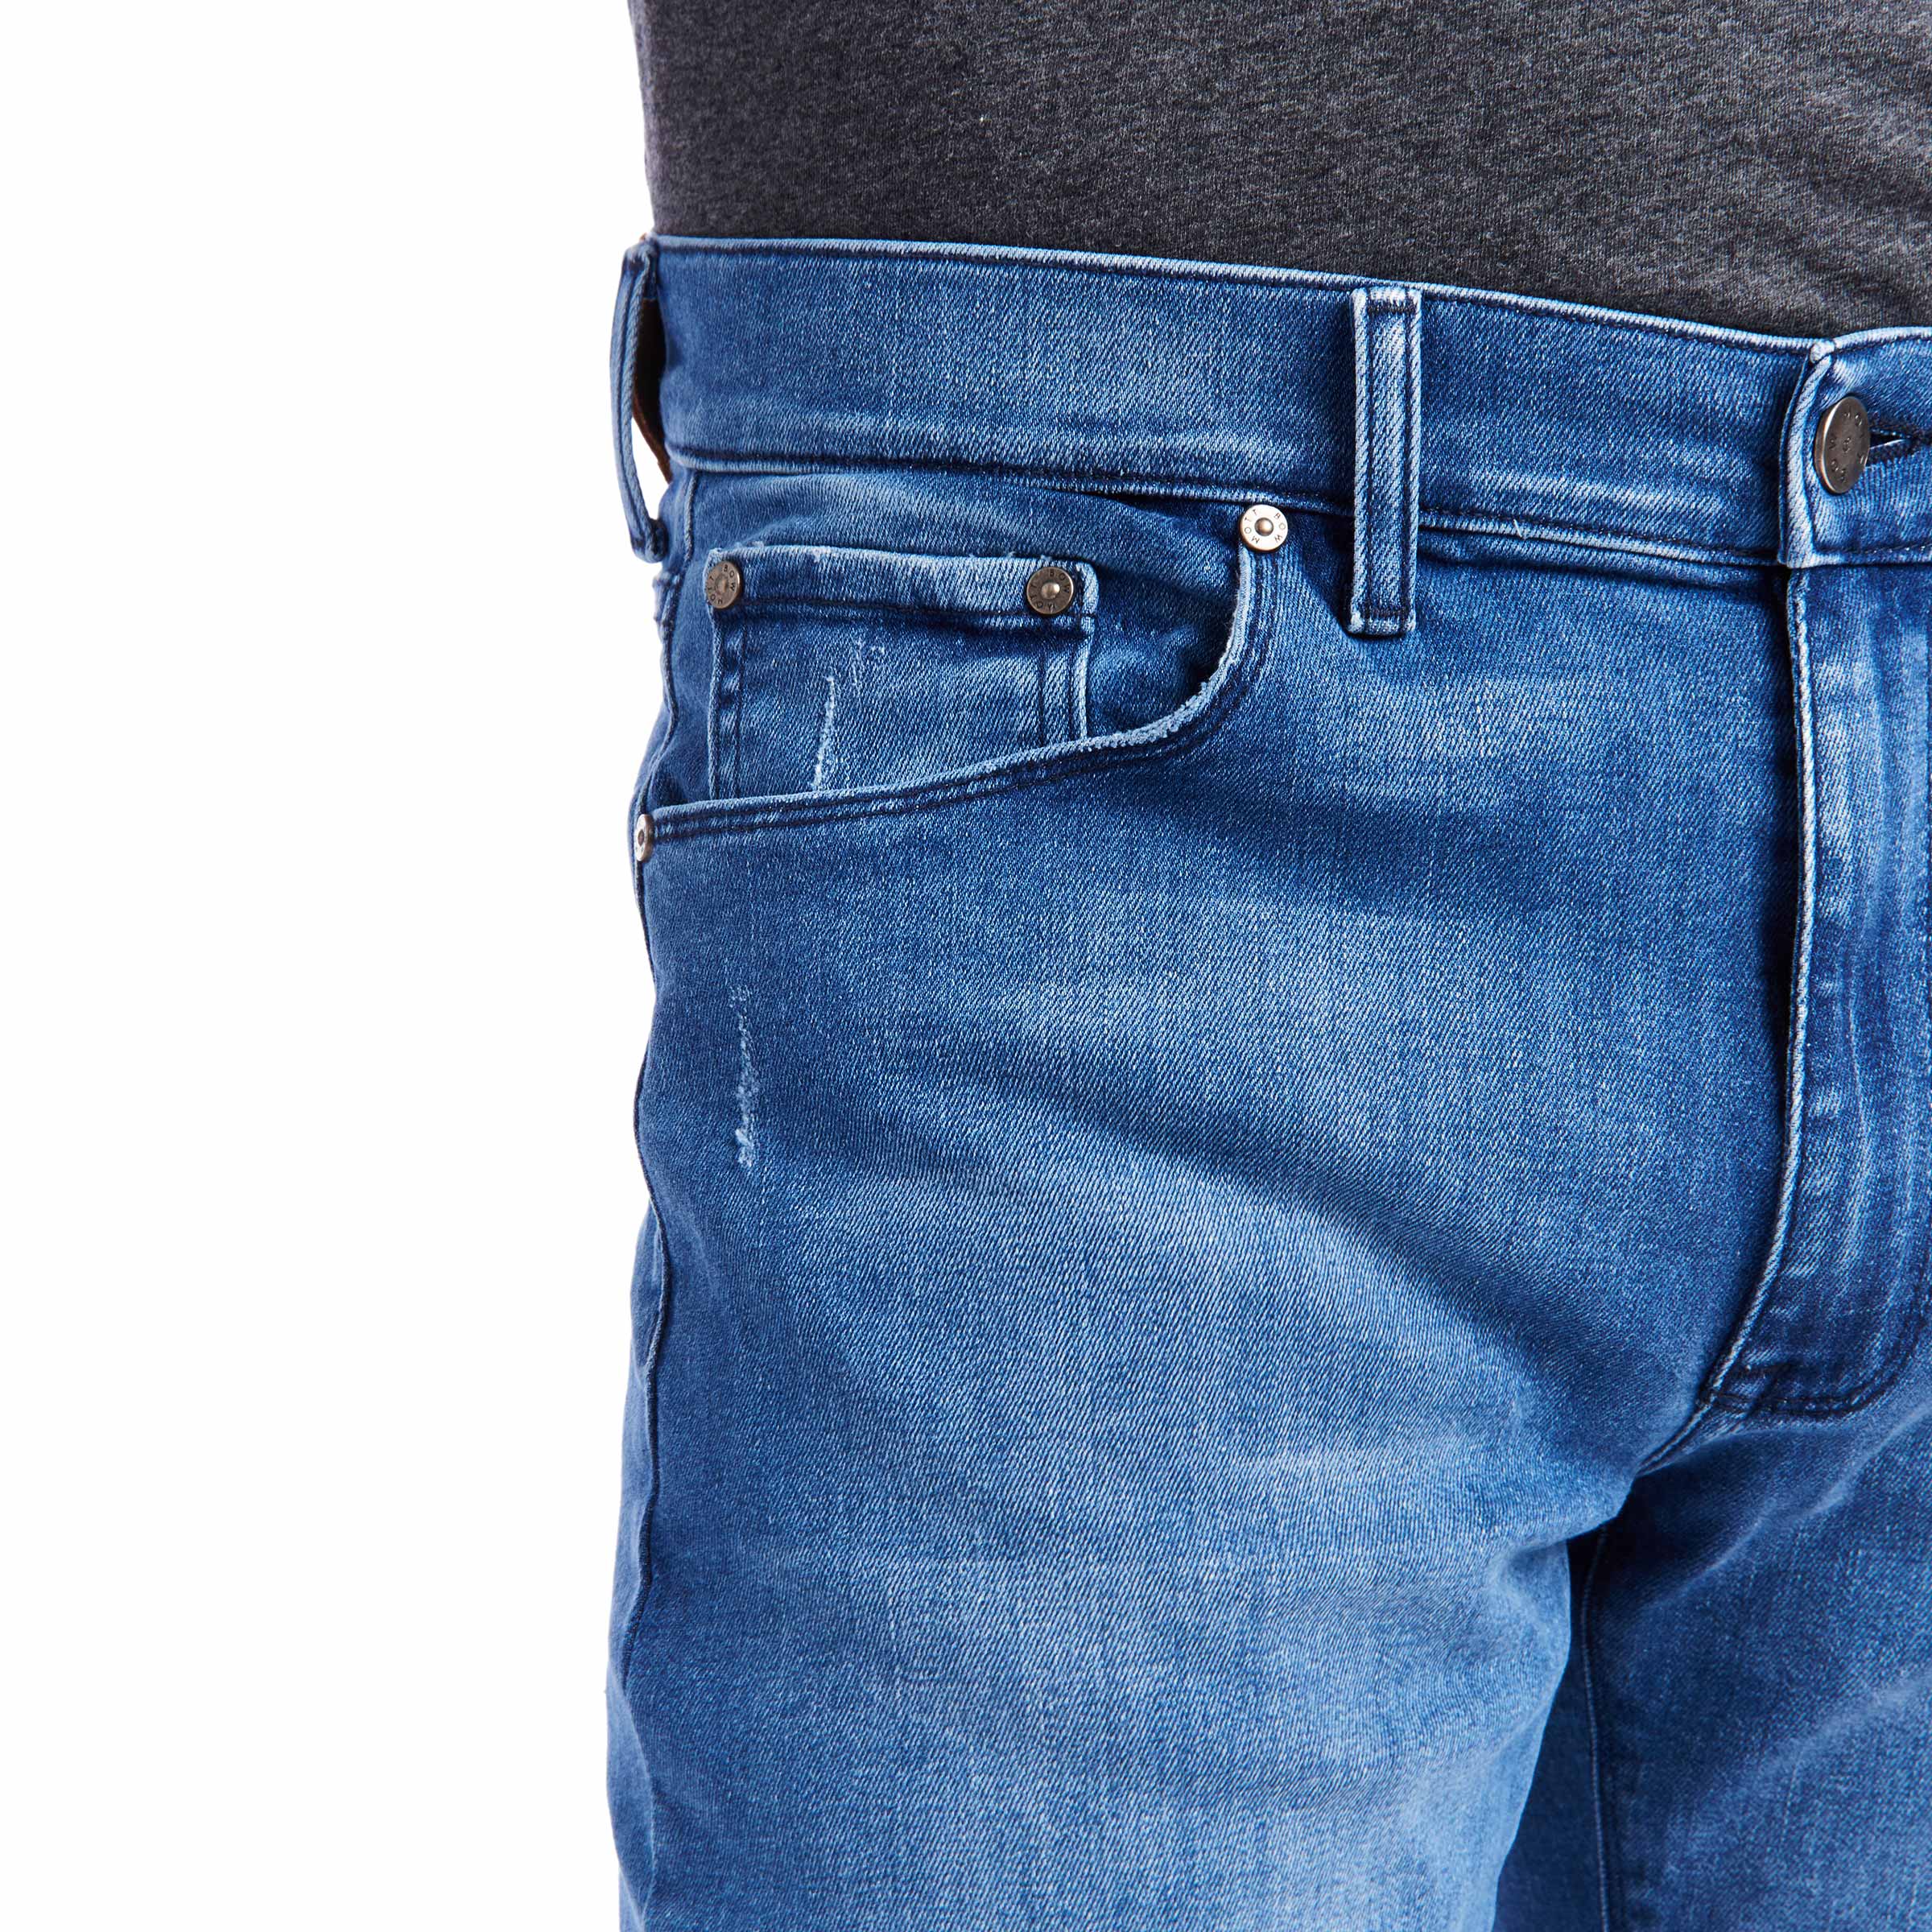 Men wearing Bleu Médium Slim Staple Jeans